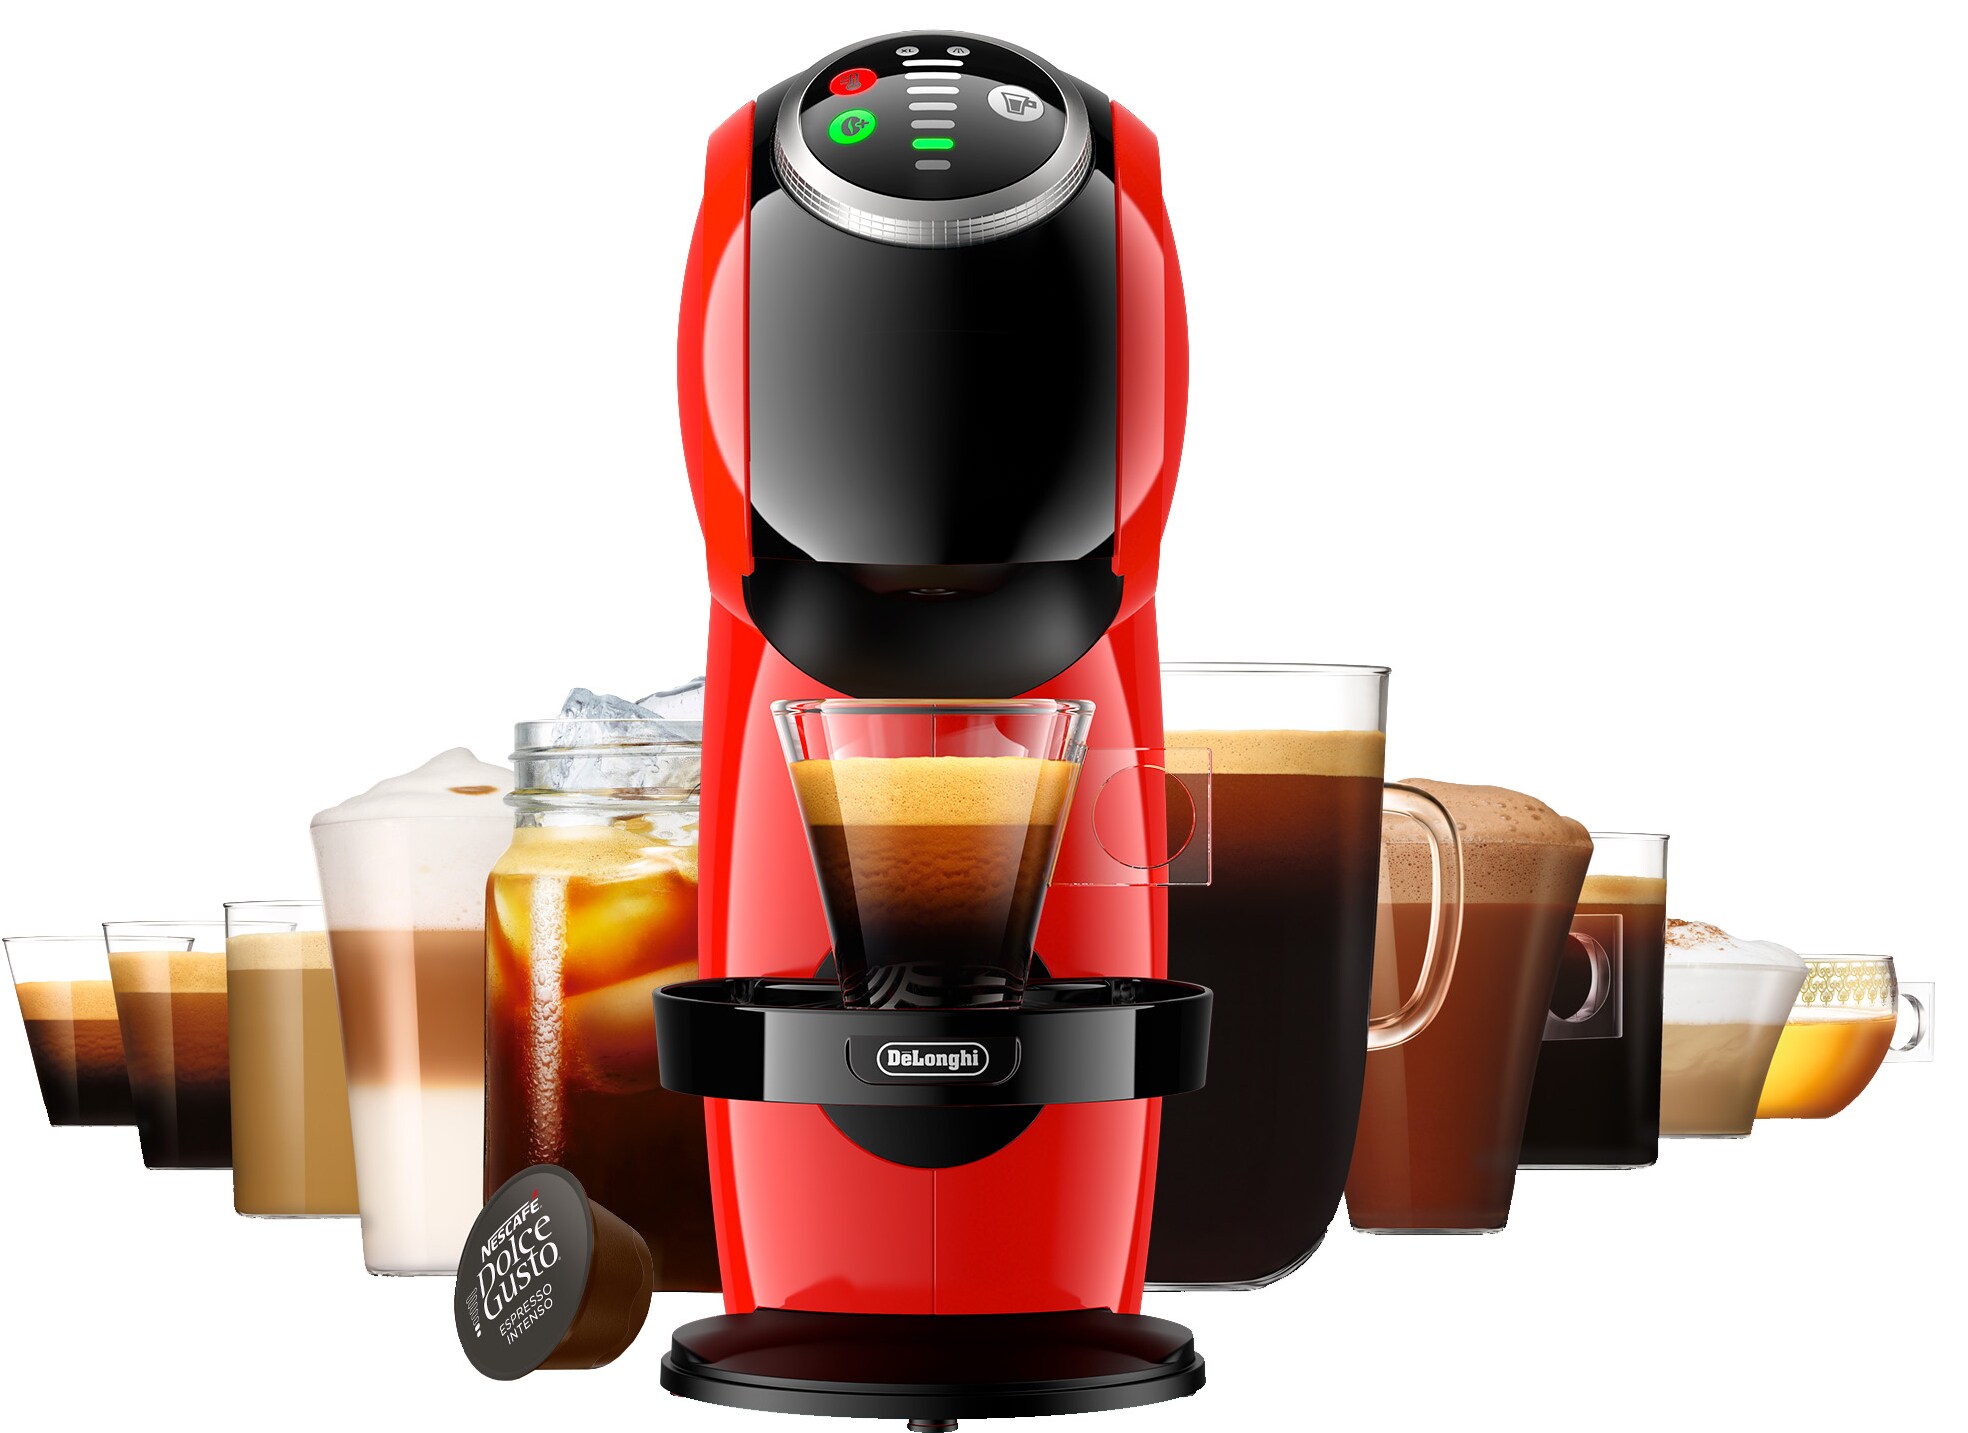 Nescafé Dolce Gusto Genio S Plus kapselmaskine (rød) | Elgiganten